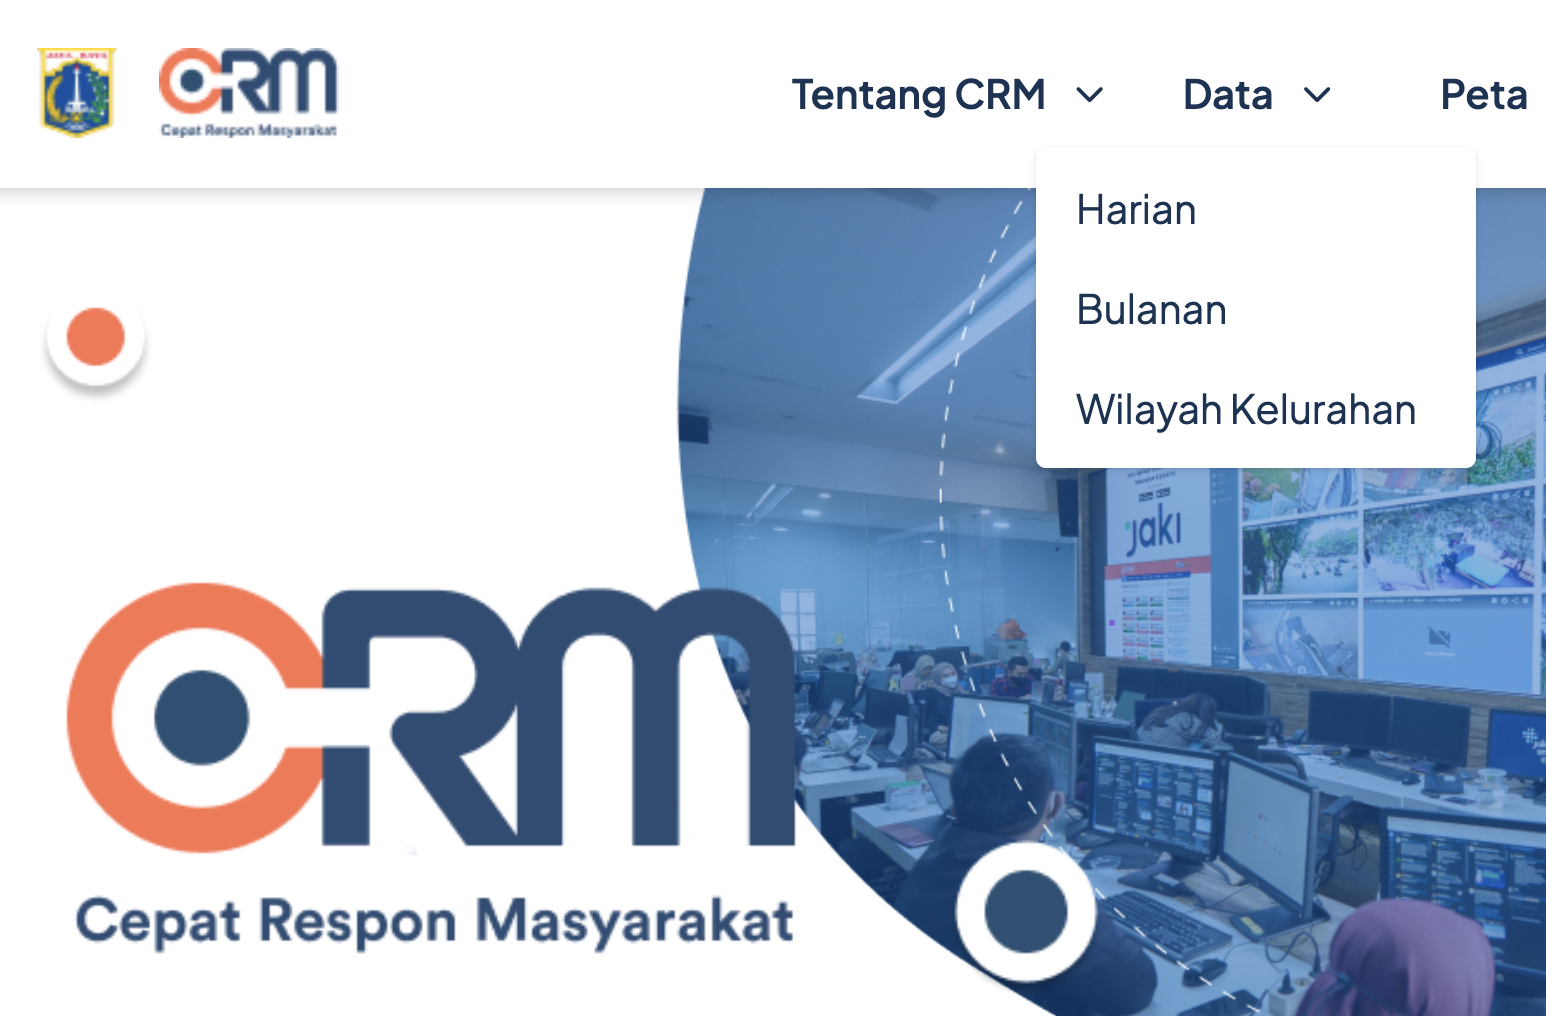 Dasbor Data Harian&nbsp; CRM